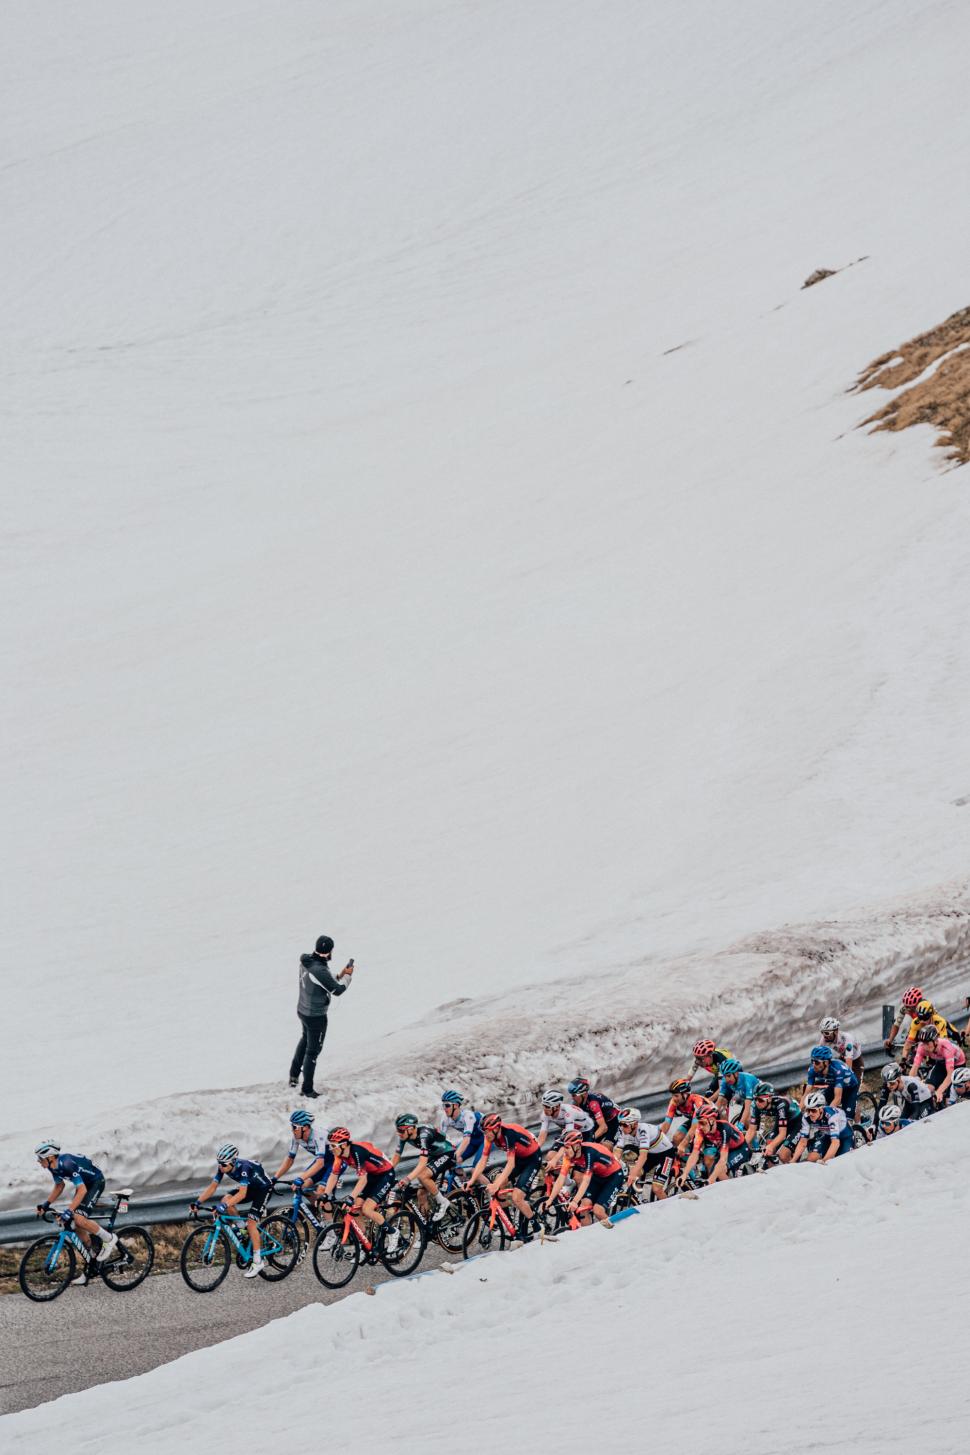 Riding through the snow at the 2023 Giro d’Italia (Zac Williams/SWpix.com)